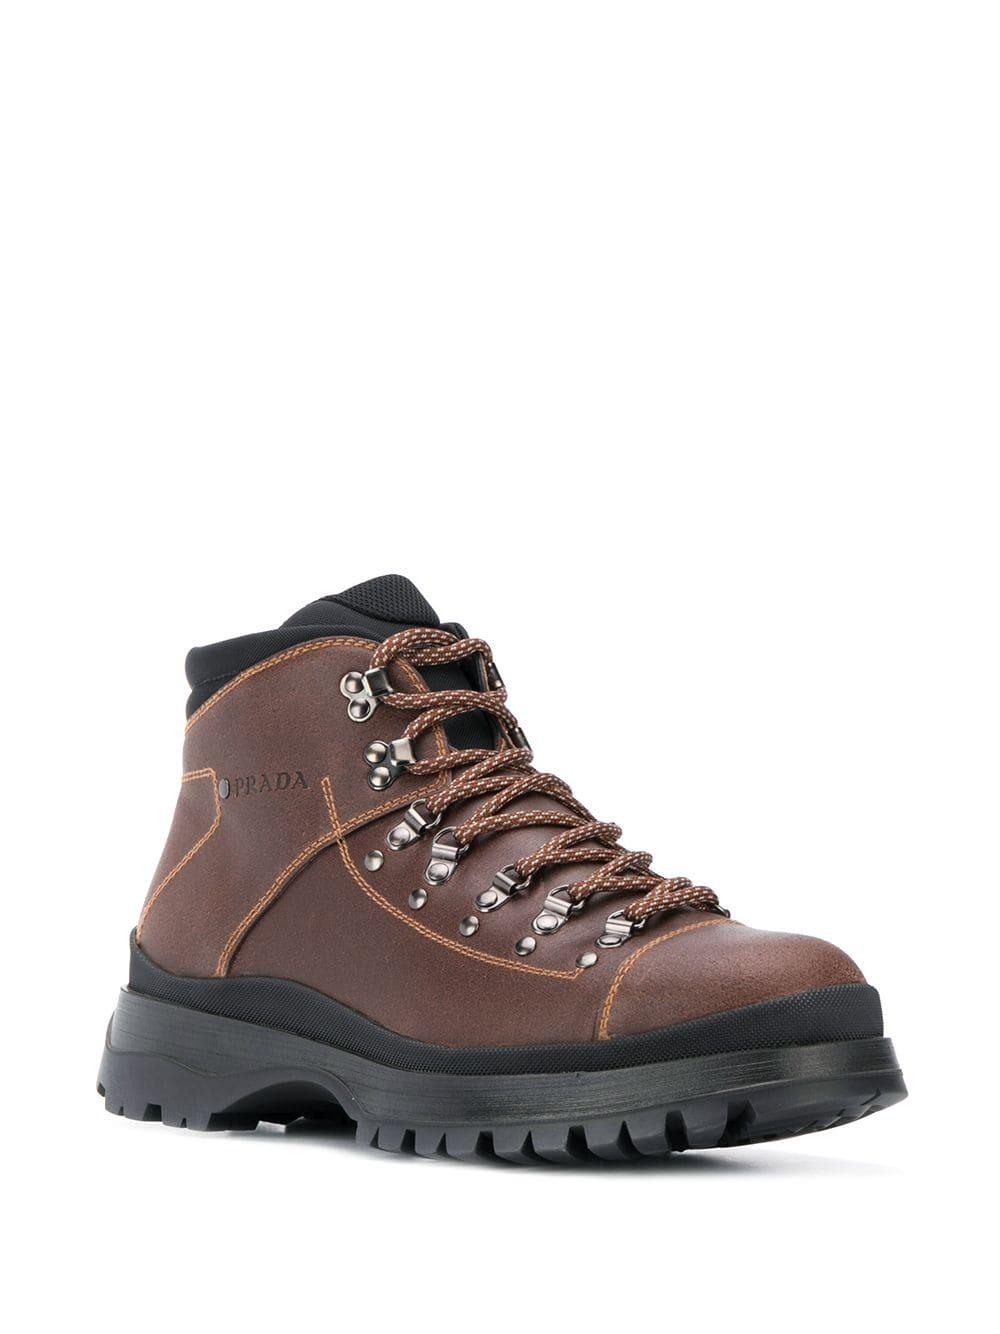 prada hiking boots mens Off 65% - class-run.com